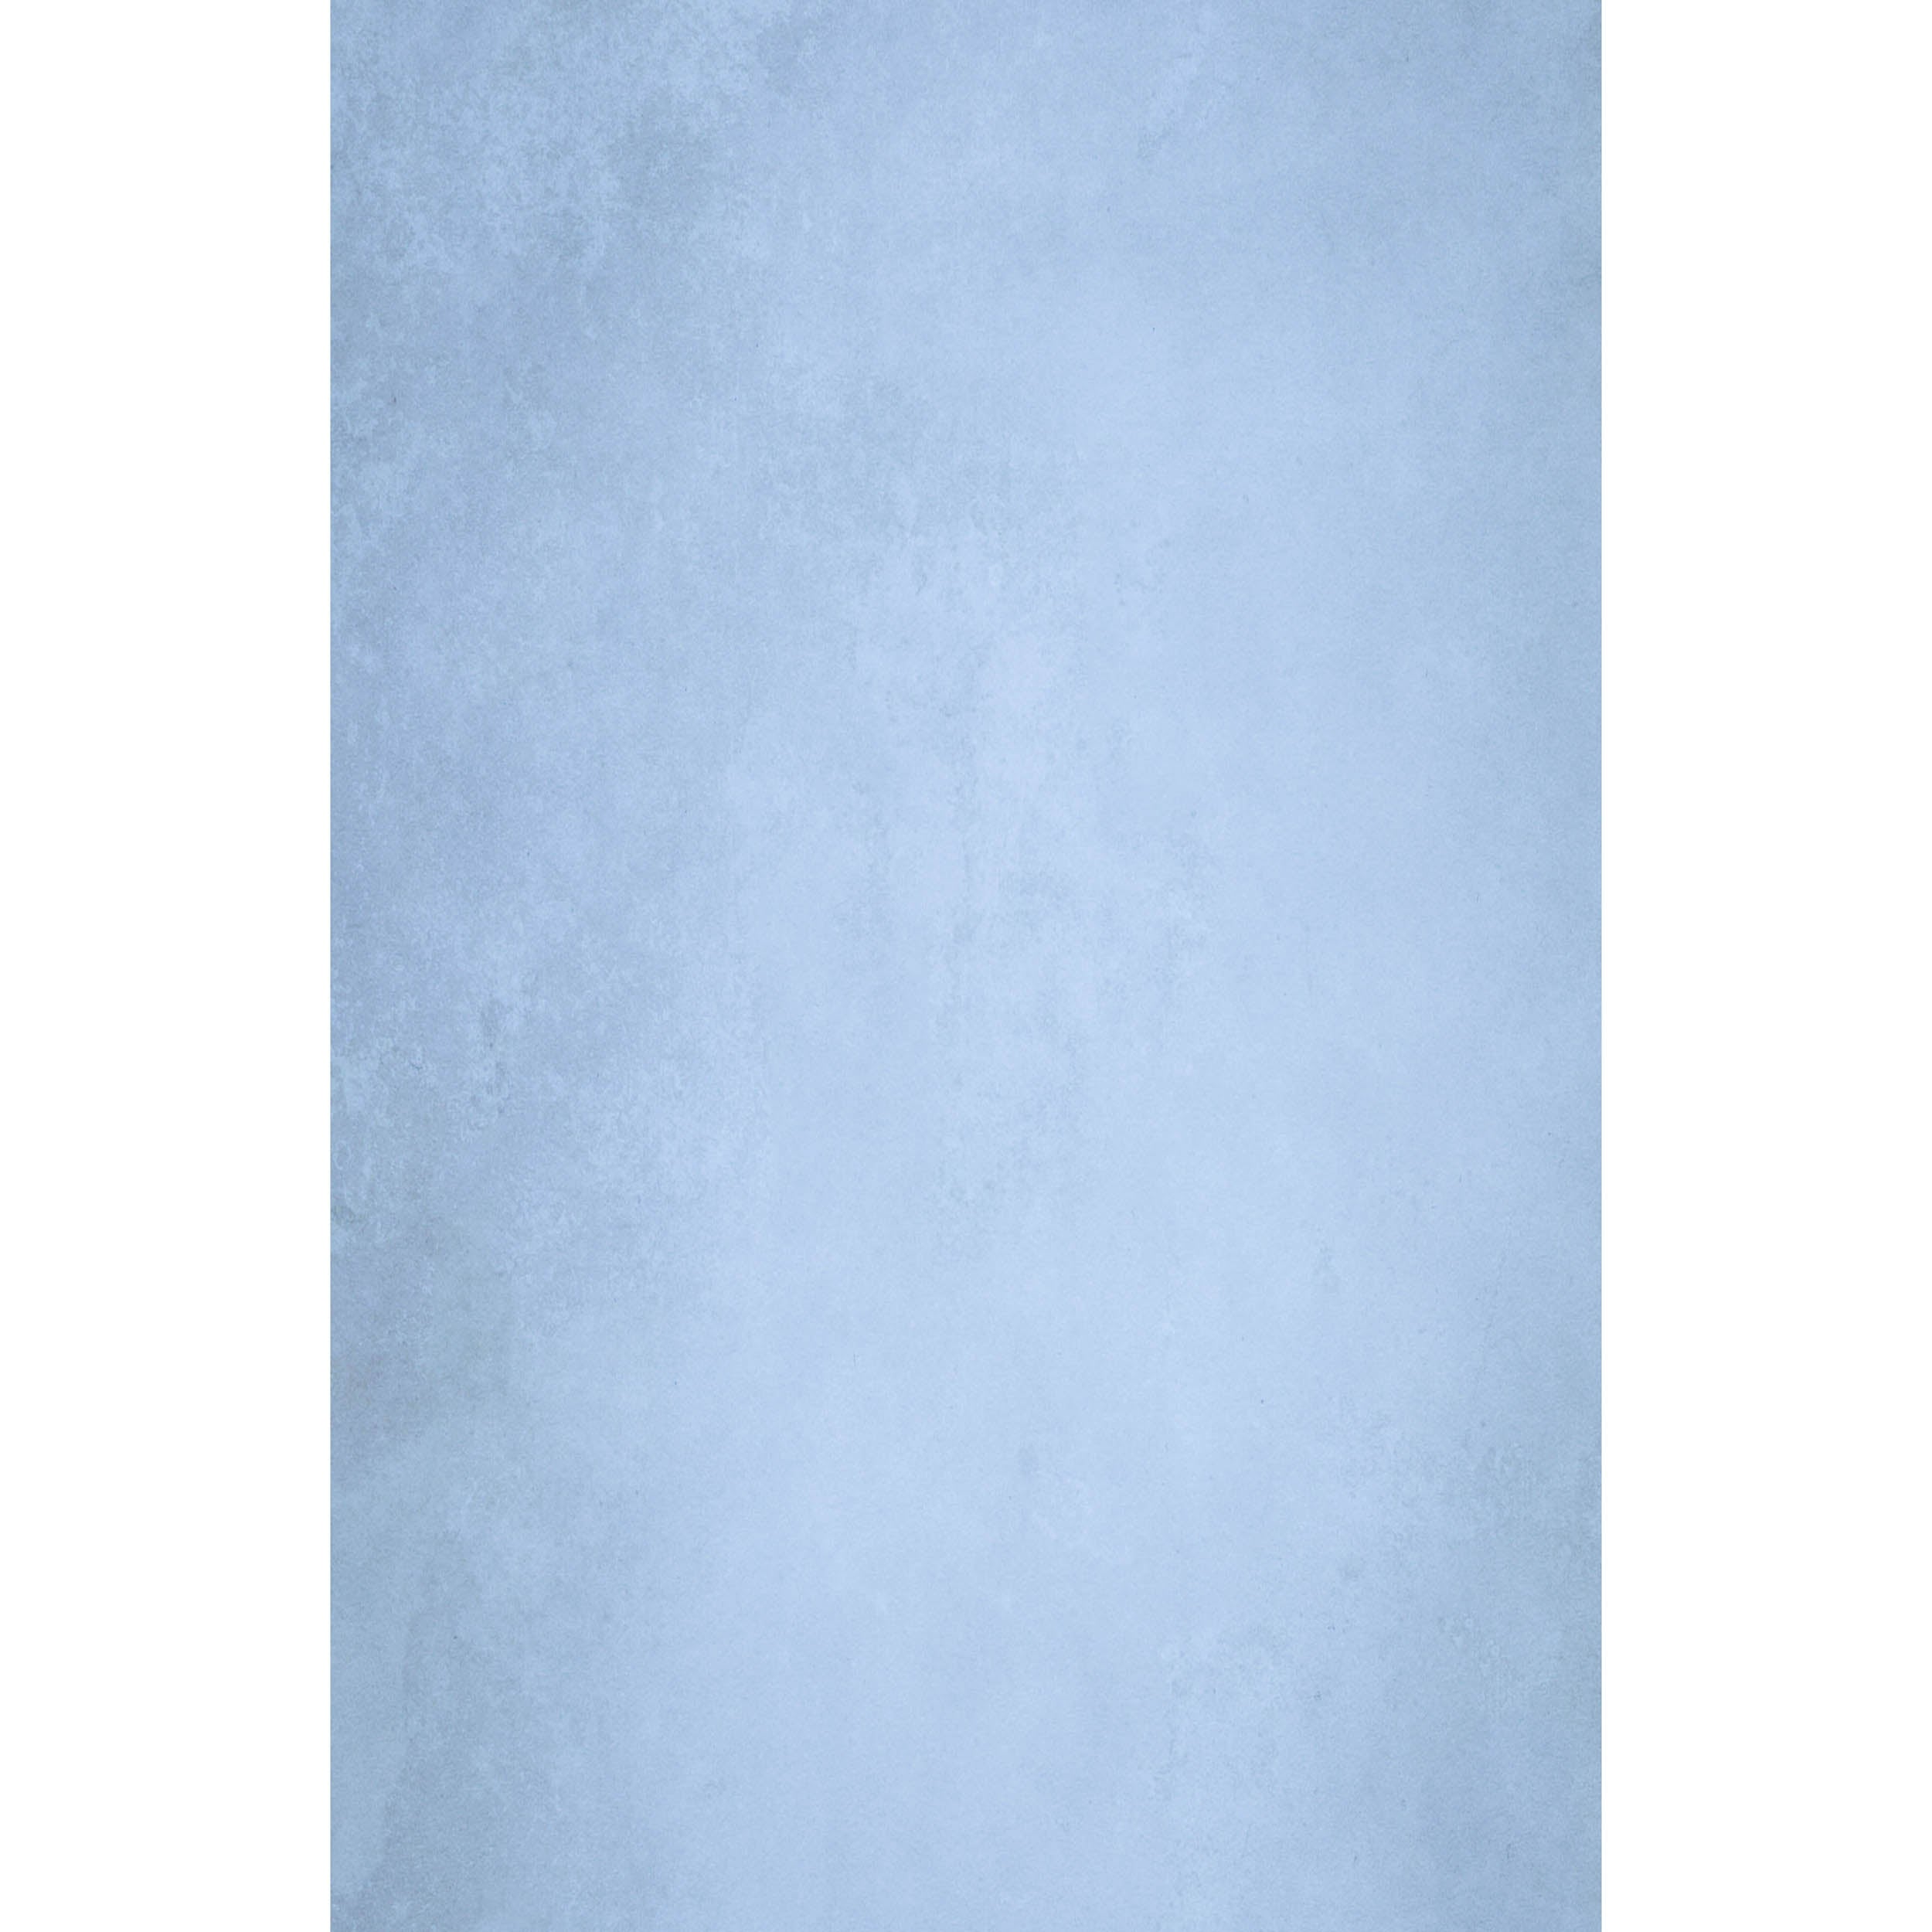 EASIFRAME CURVED C29-Light Blue Fabric Skin Pattern